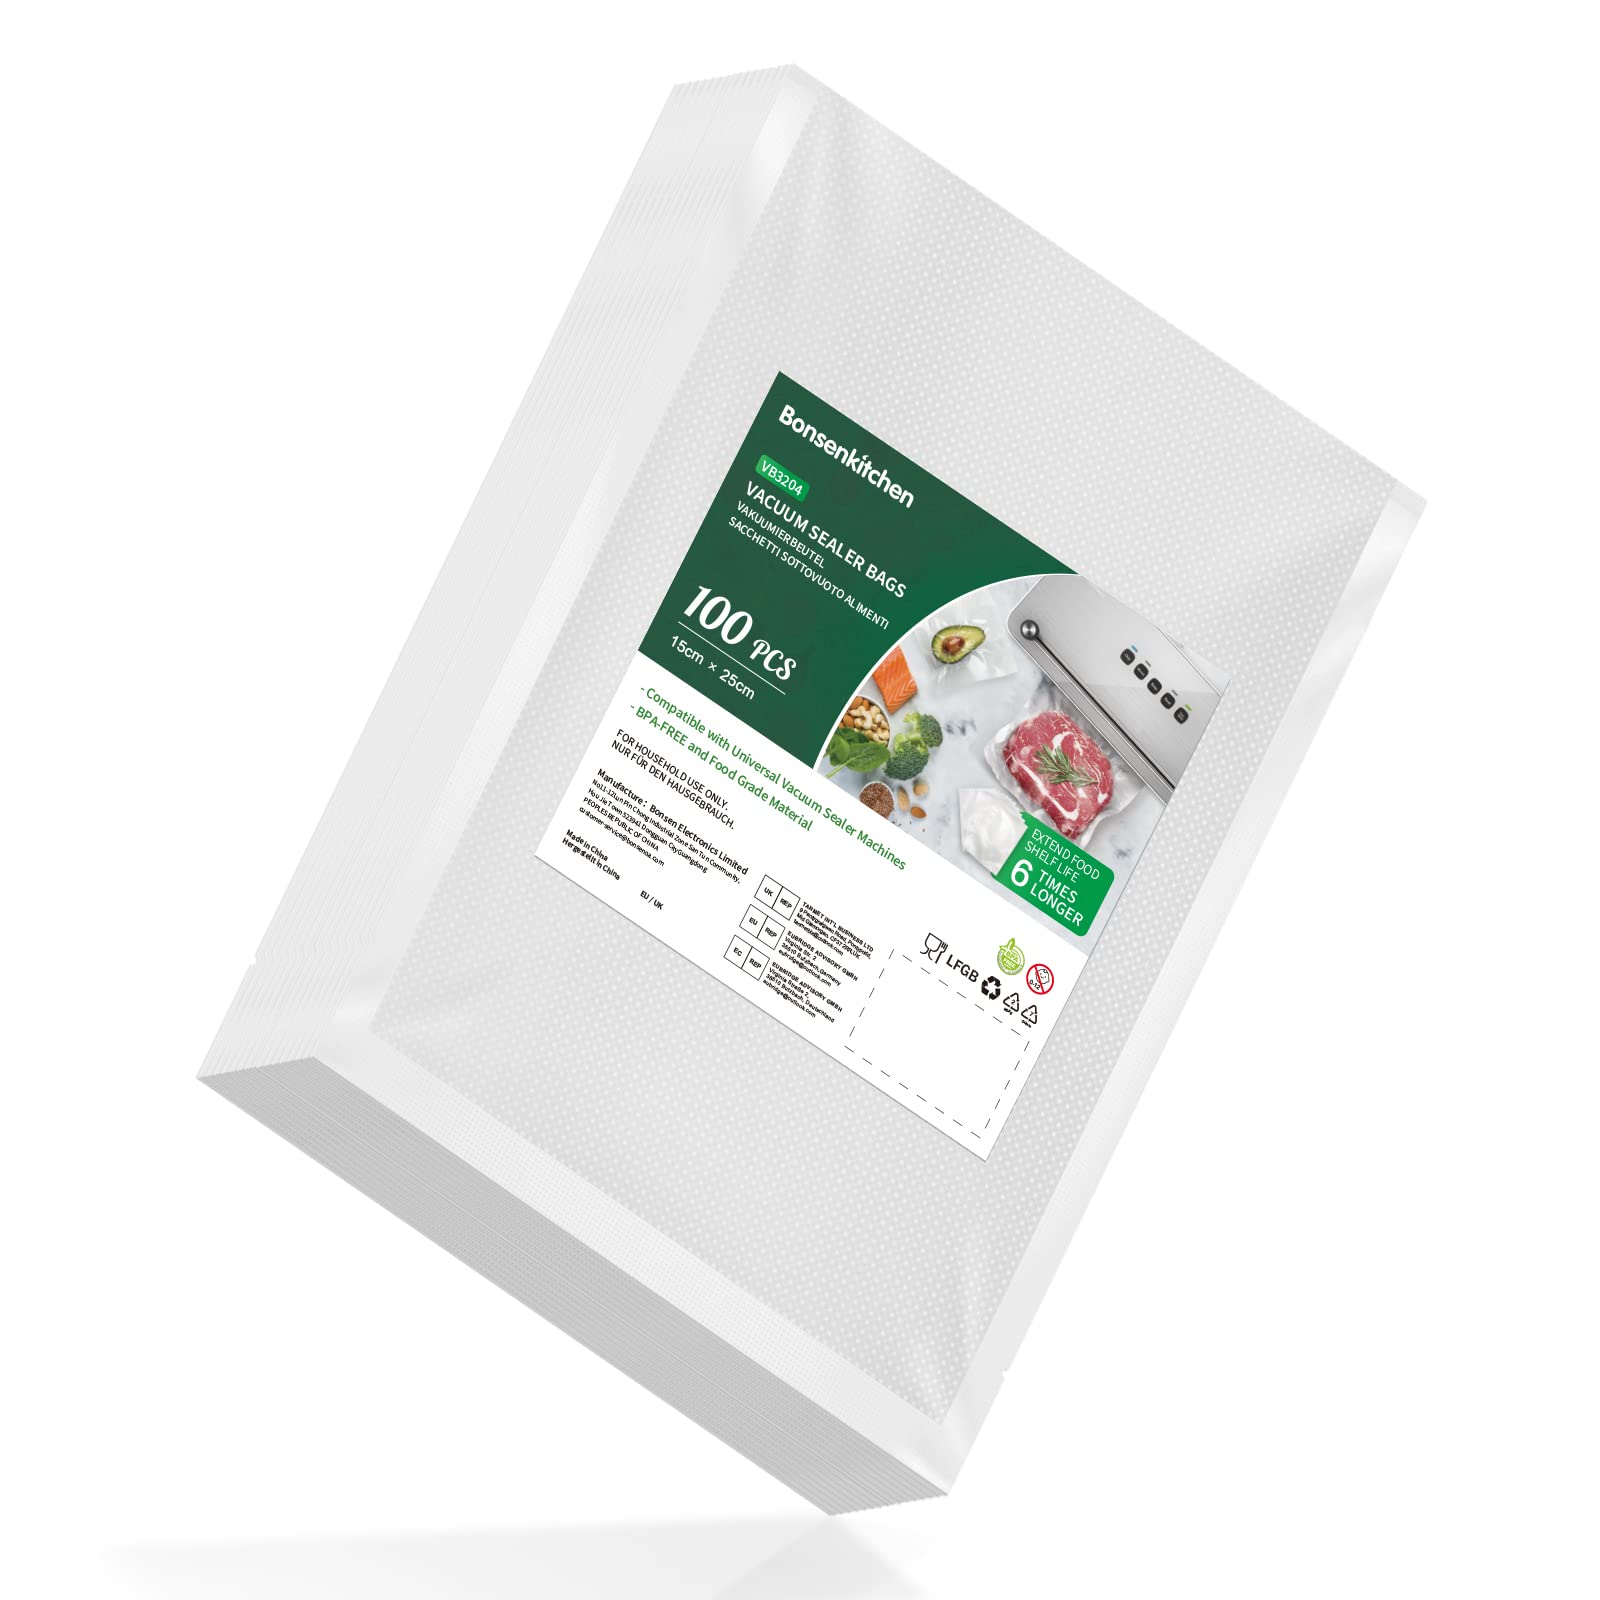 8'*12' Quart Food Packaging Bags for Sous Vide, Embossed